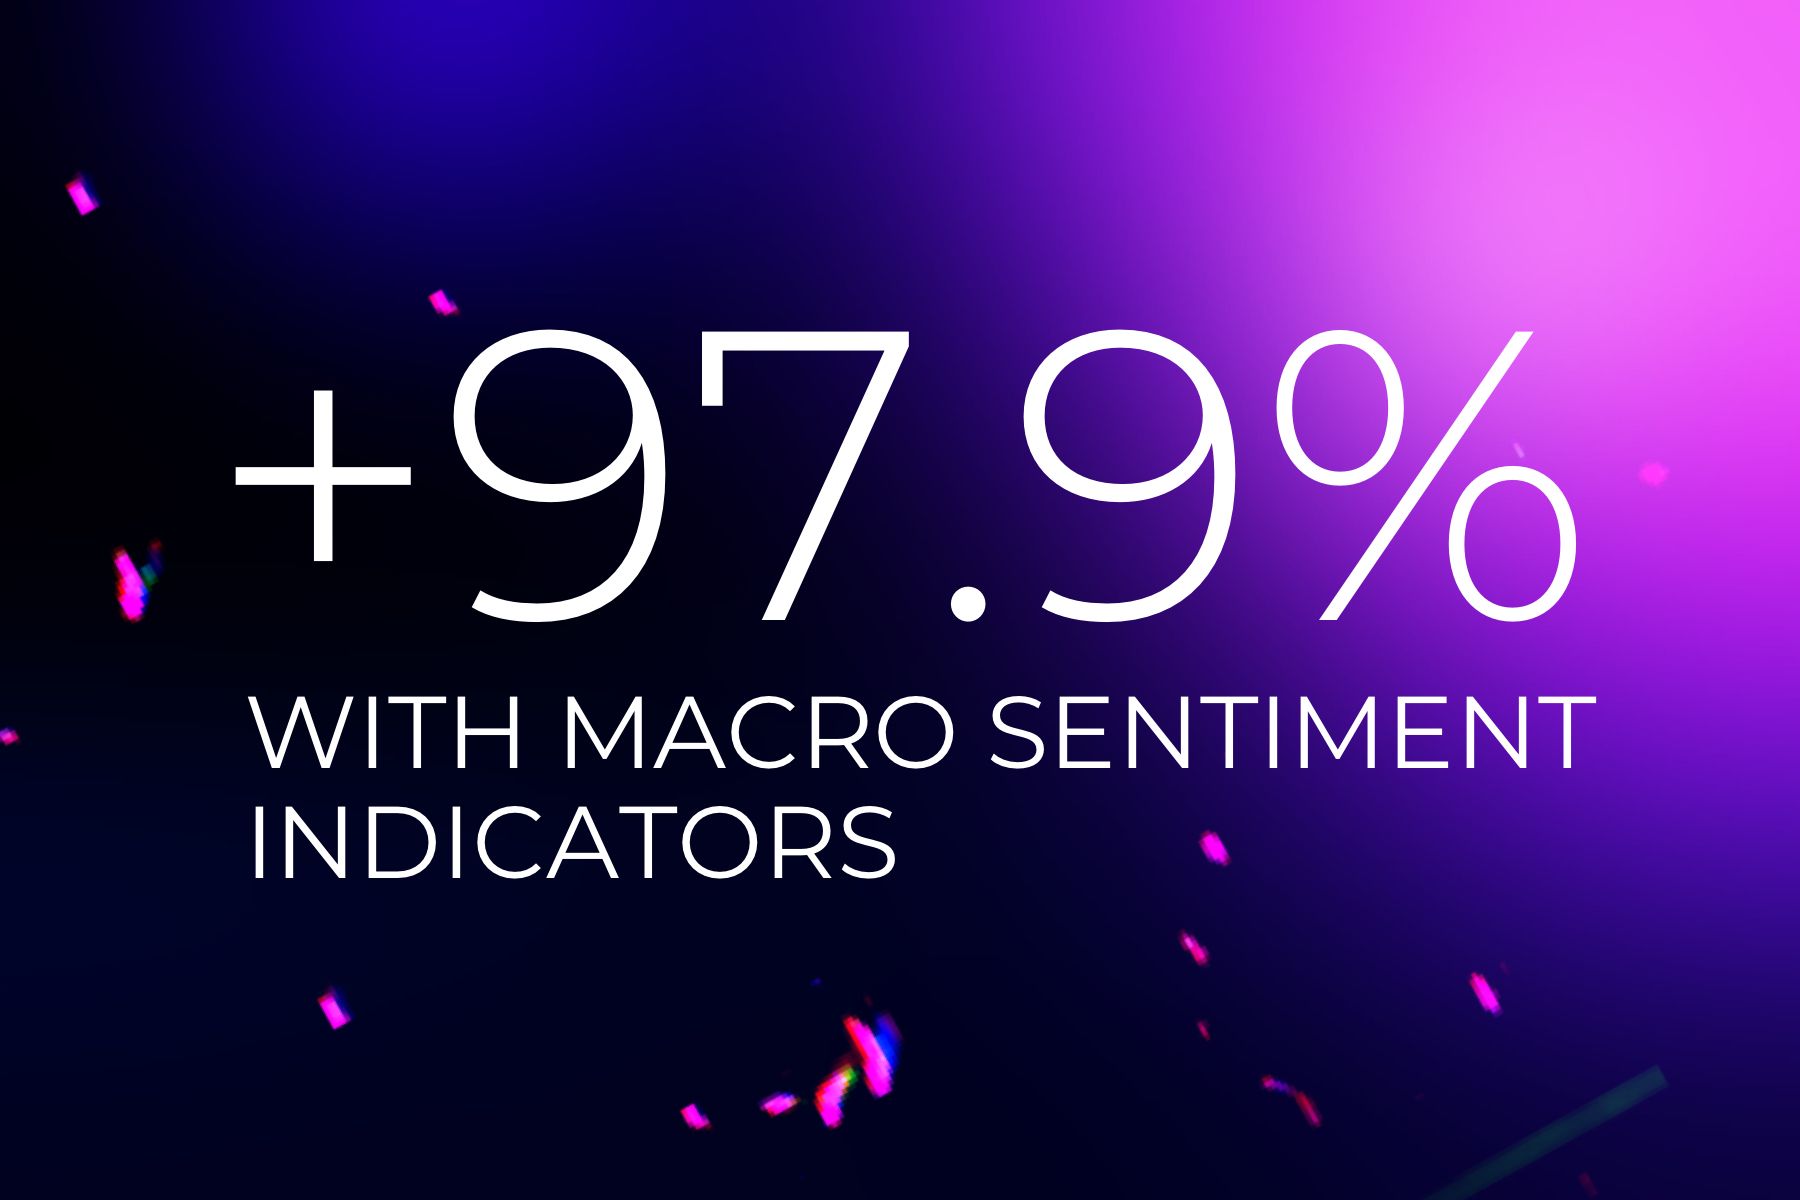 Macro Sentiment Indicators: 5x better than S&P 500